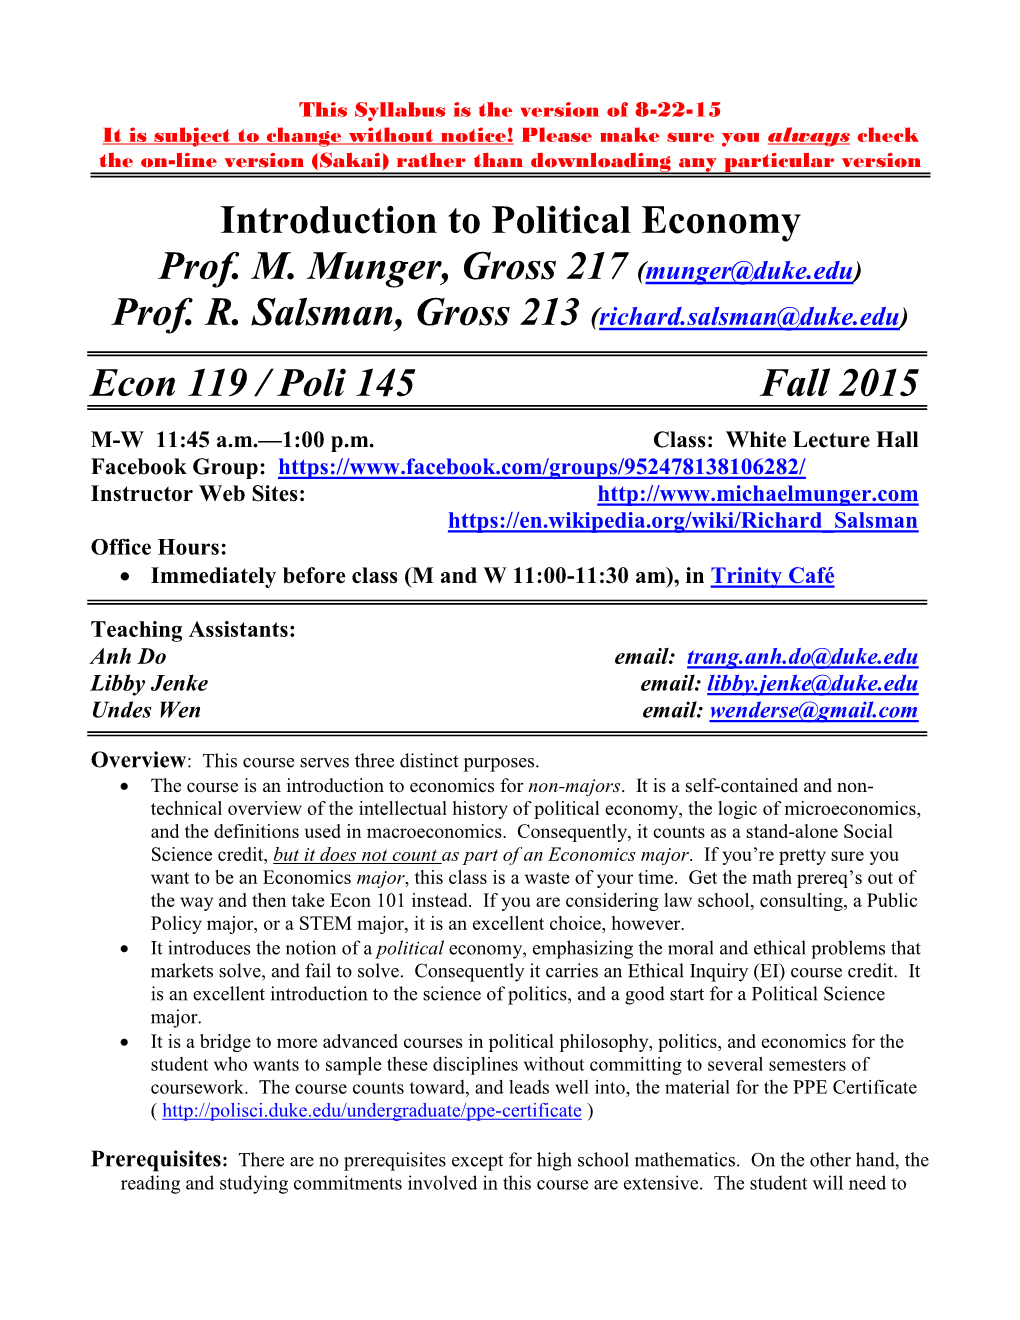 Introduction to Political Economy Prof. M. Munger, Gross 217 (Munger@Duke.Edu) Prof